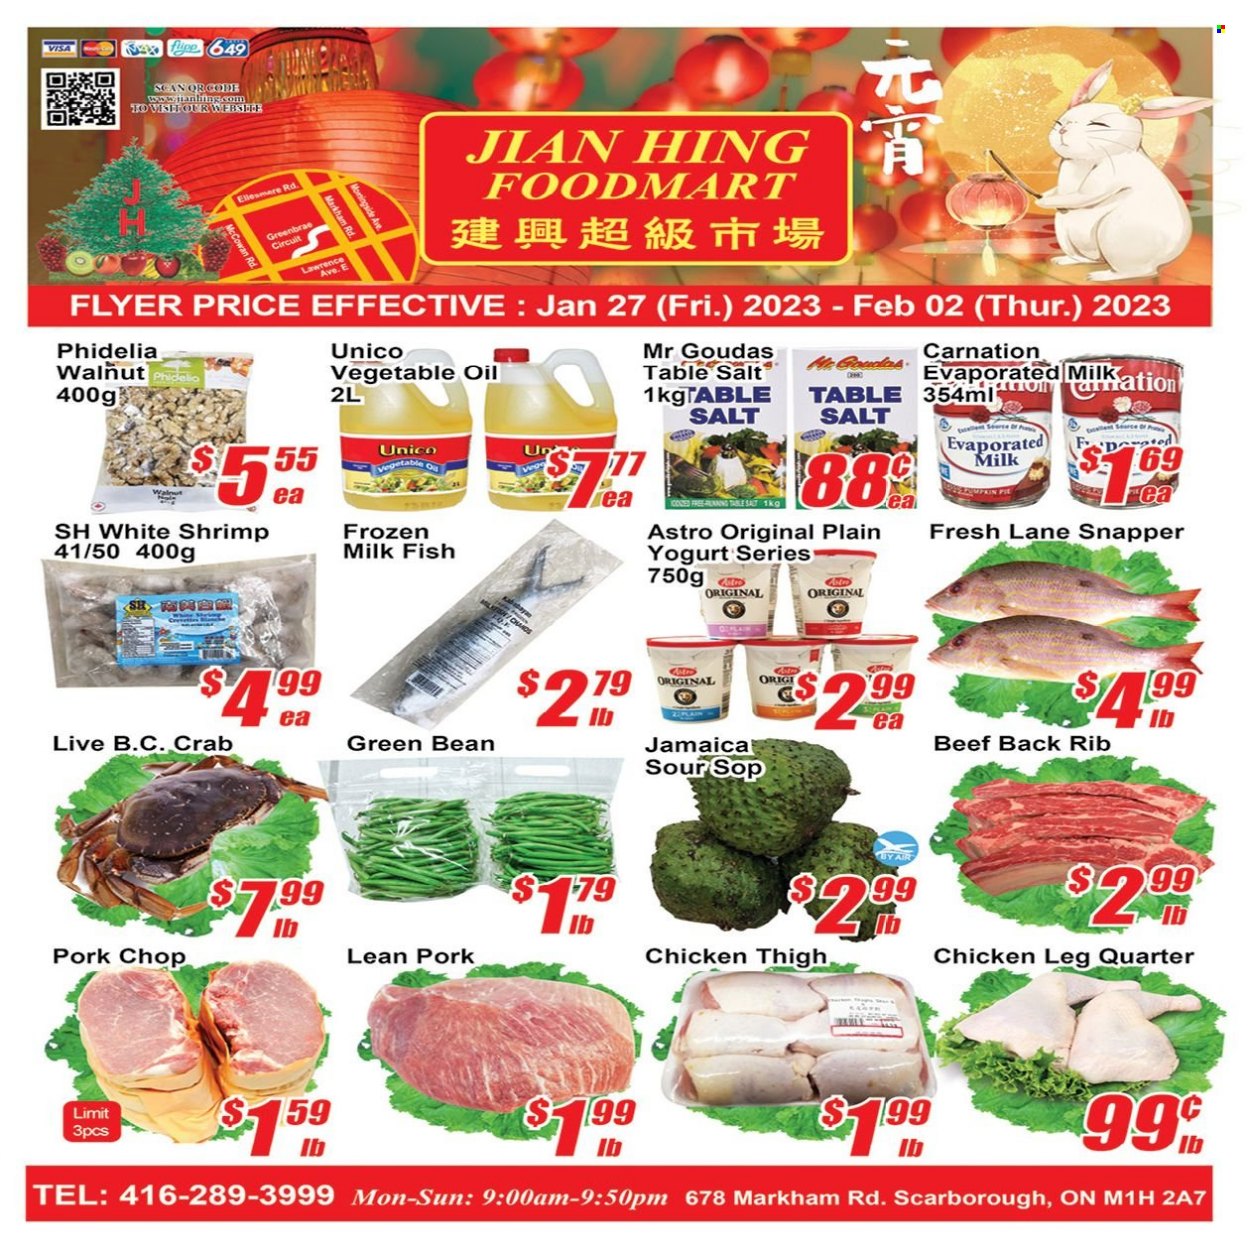 Circulaire Jian Hing Supermarket  - 27 Janvier 2023 - 02 Février 2023.